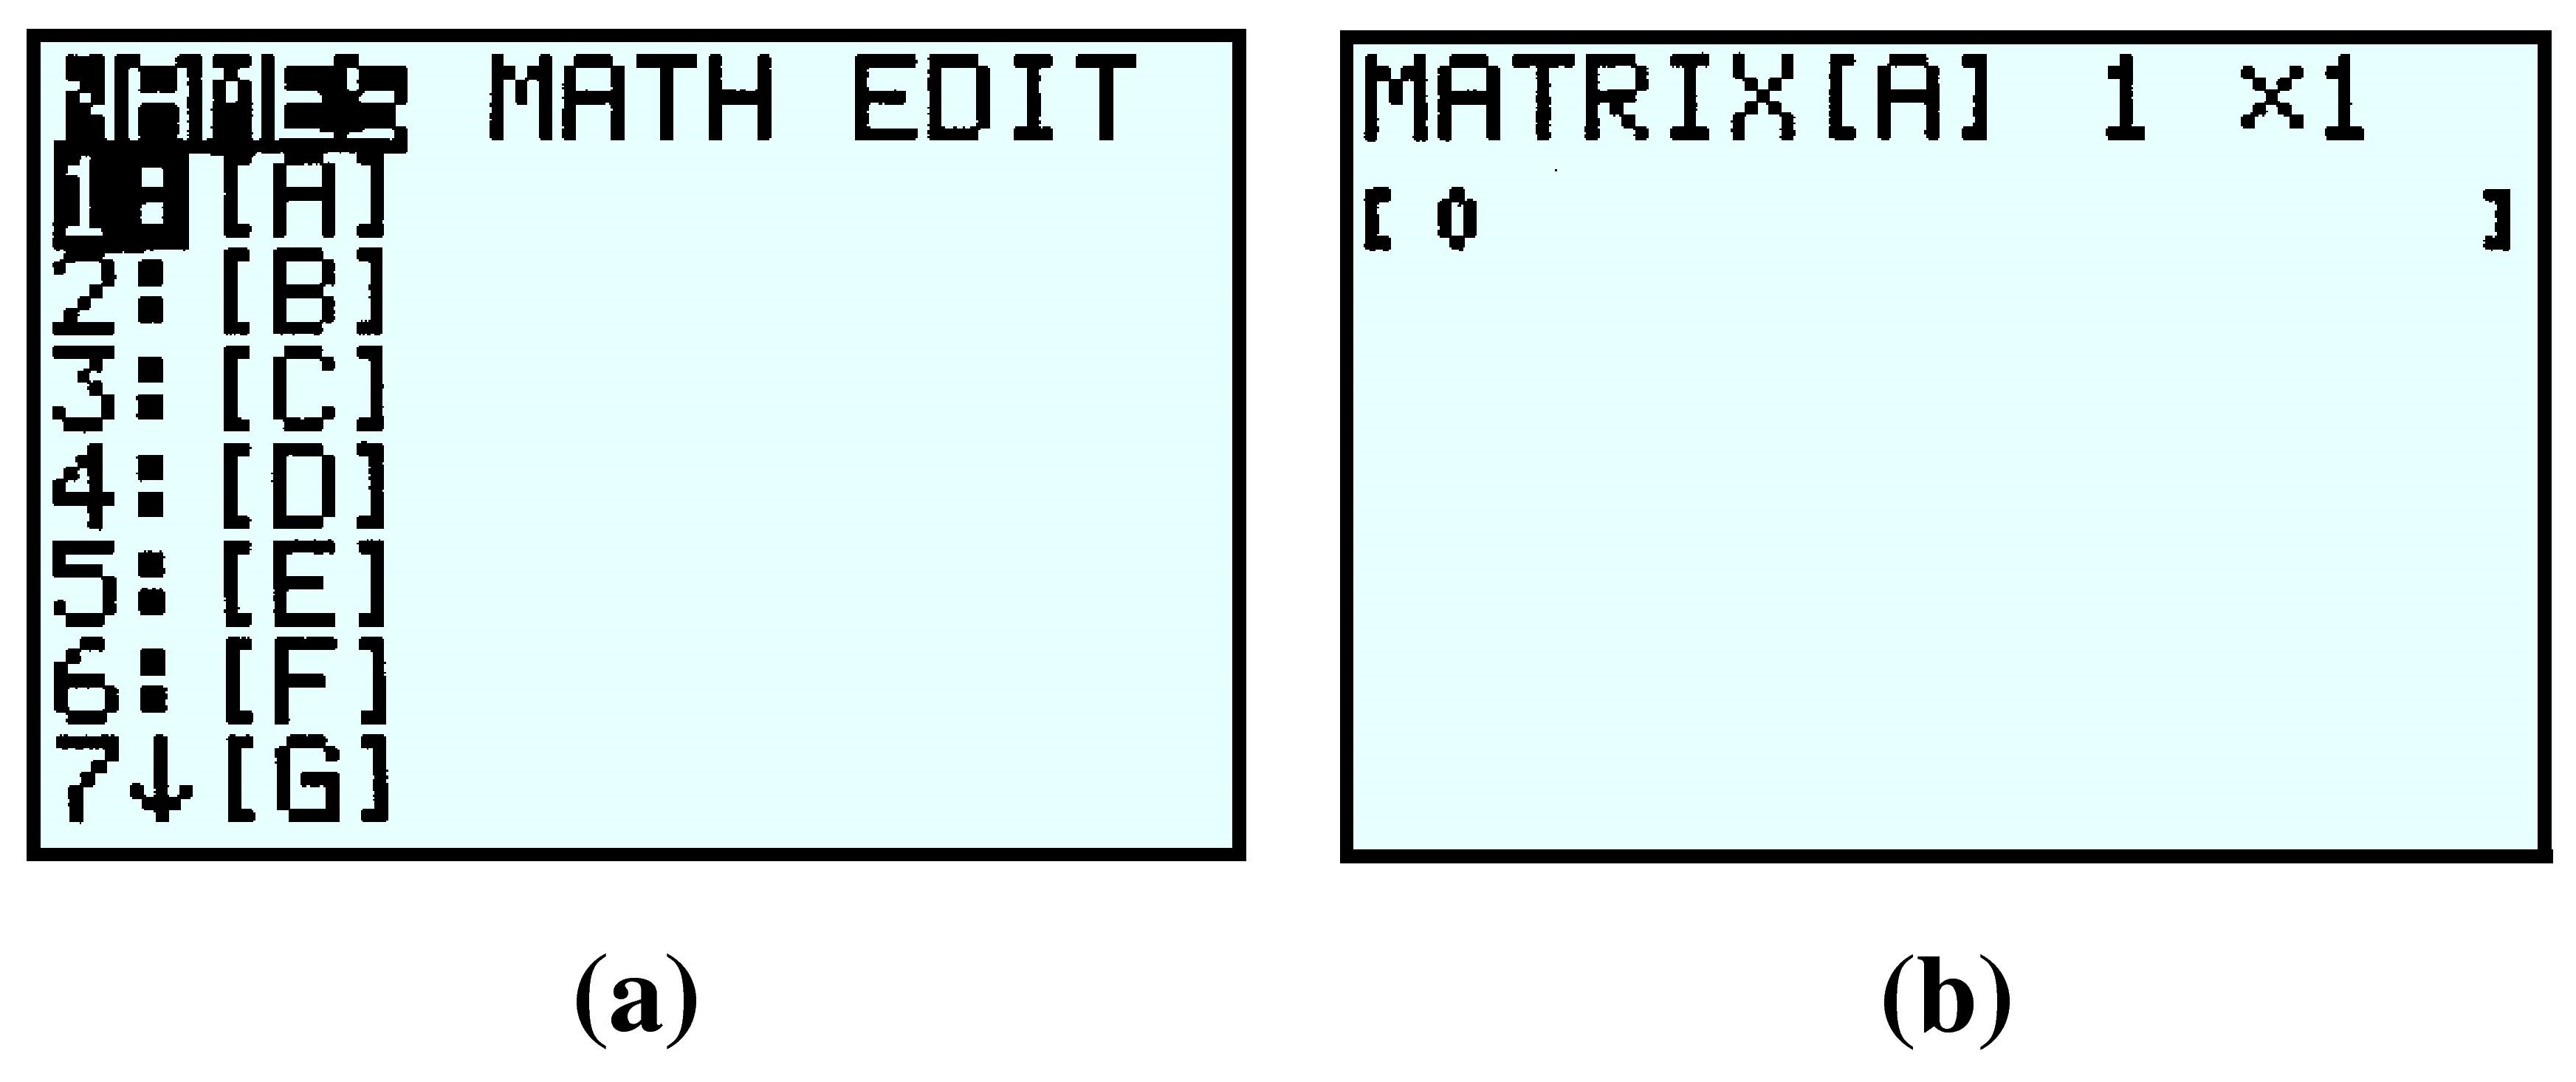 GC windows to edit or create a matrix